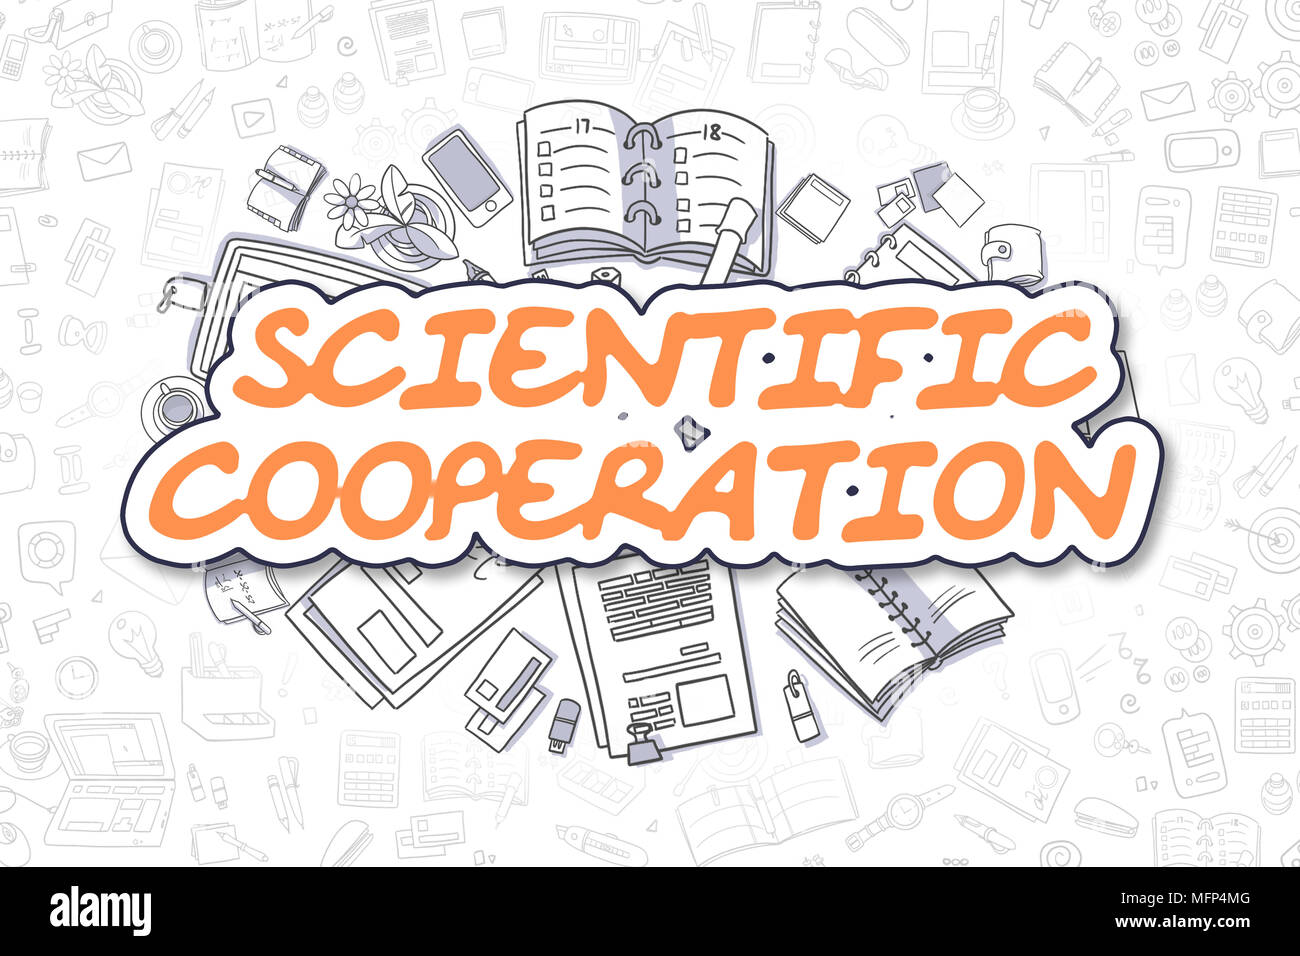 Scientific Cooperation - Business Concept. Stock Photo